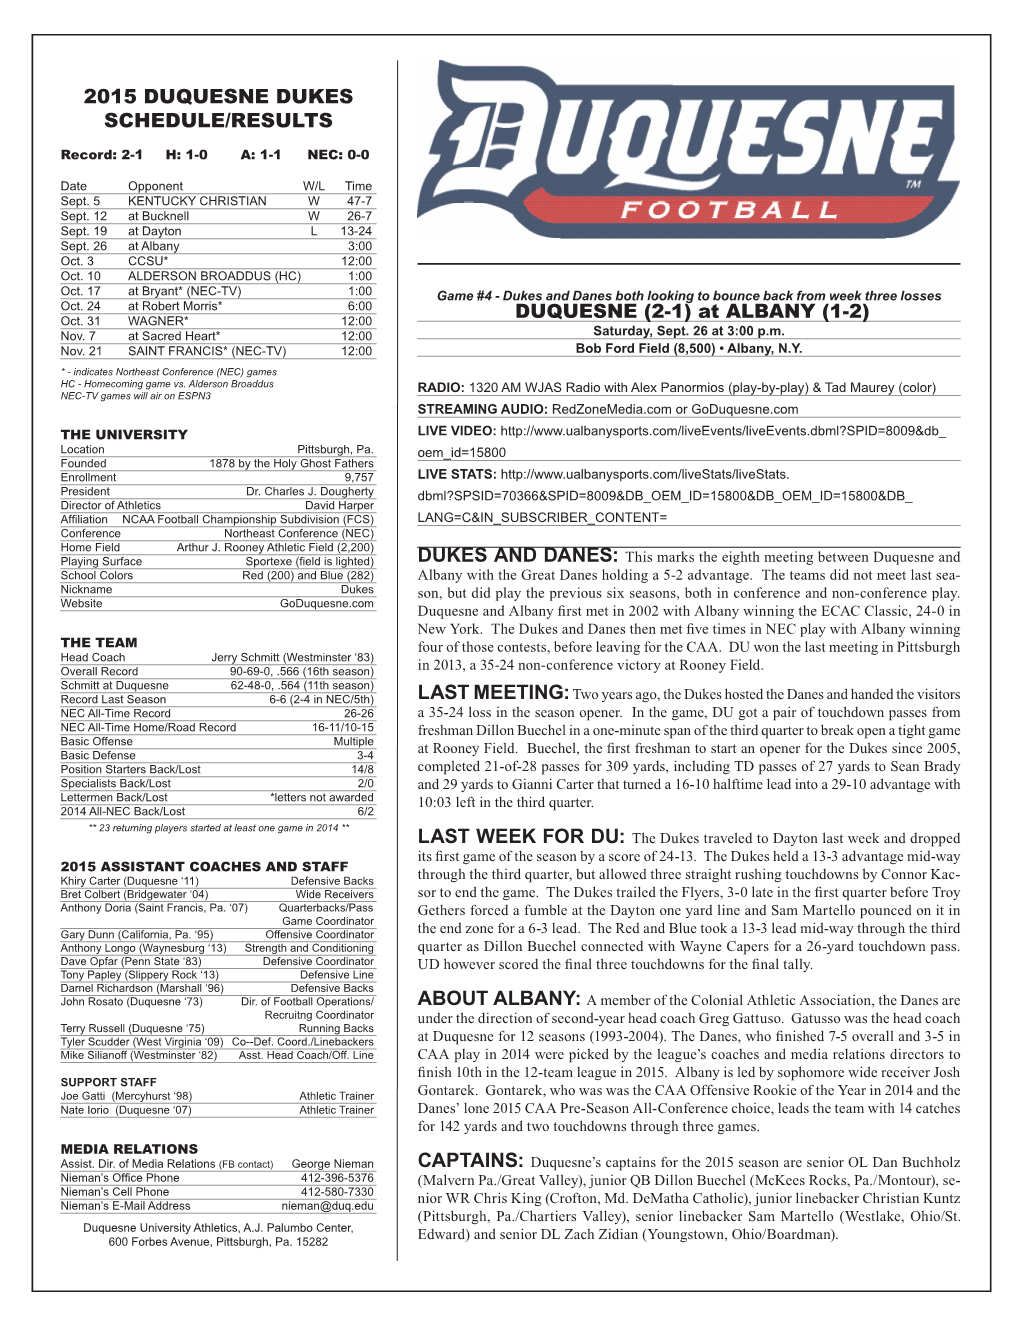 2015 Duquesne Dukes Schedule/Results